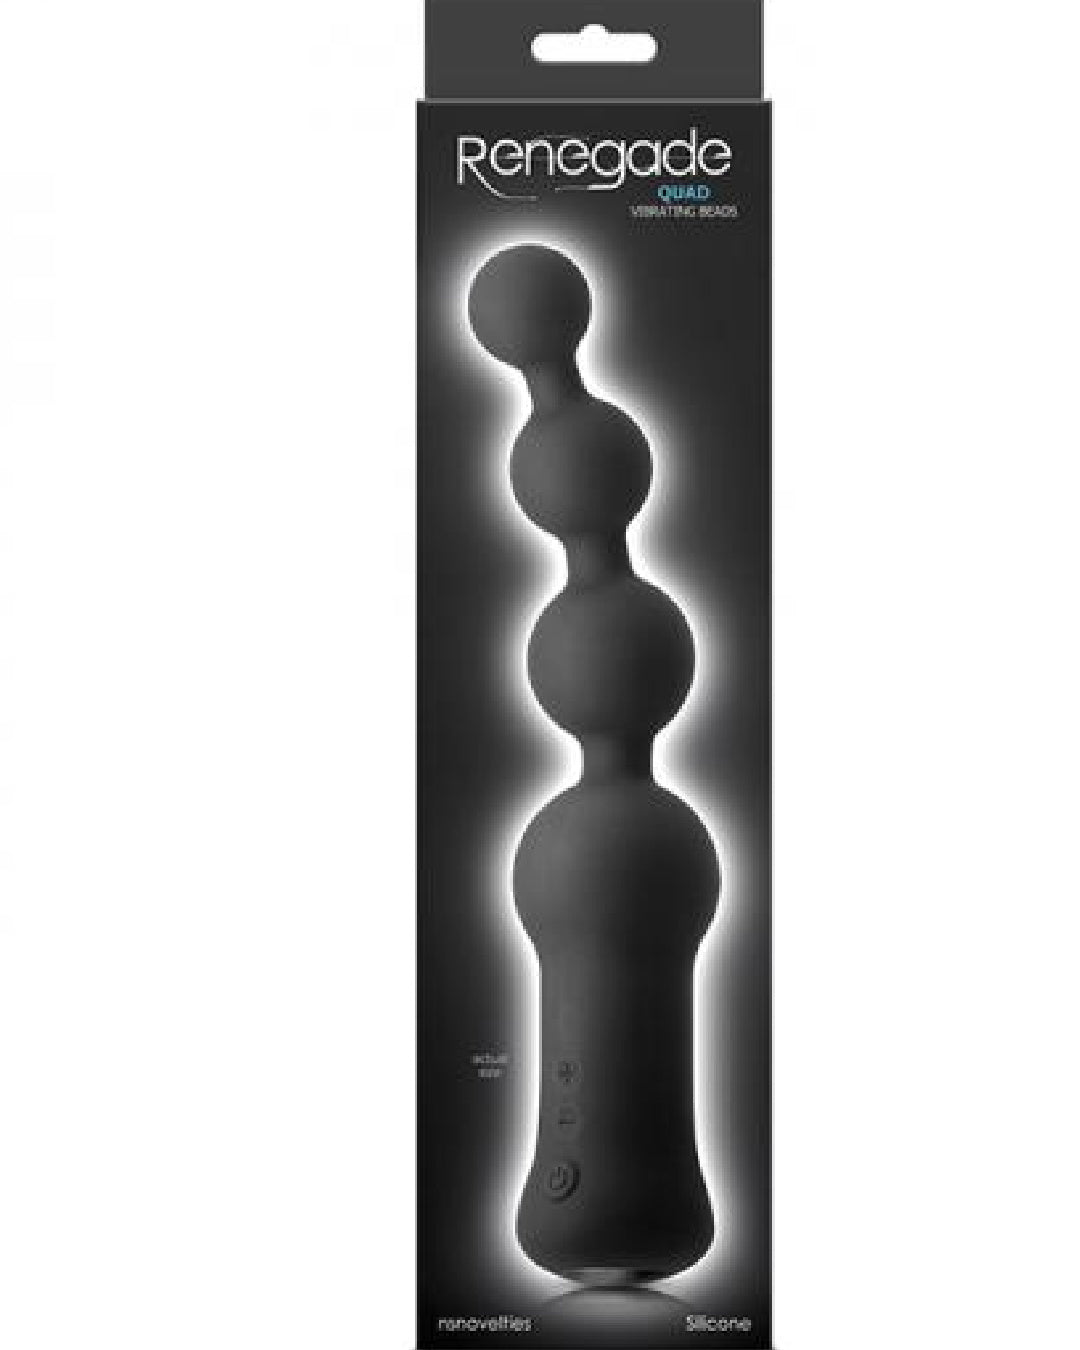 Renegade Quad Vibrating Anal Beads black product box on white background 